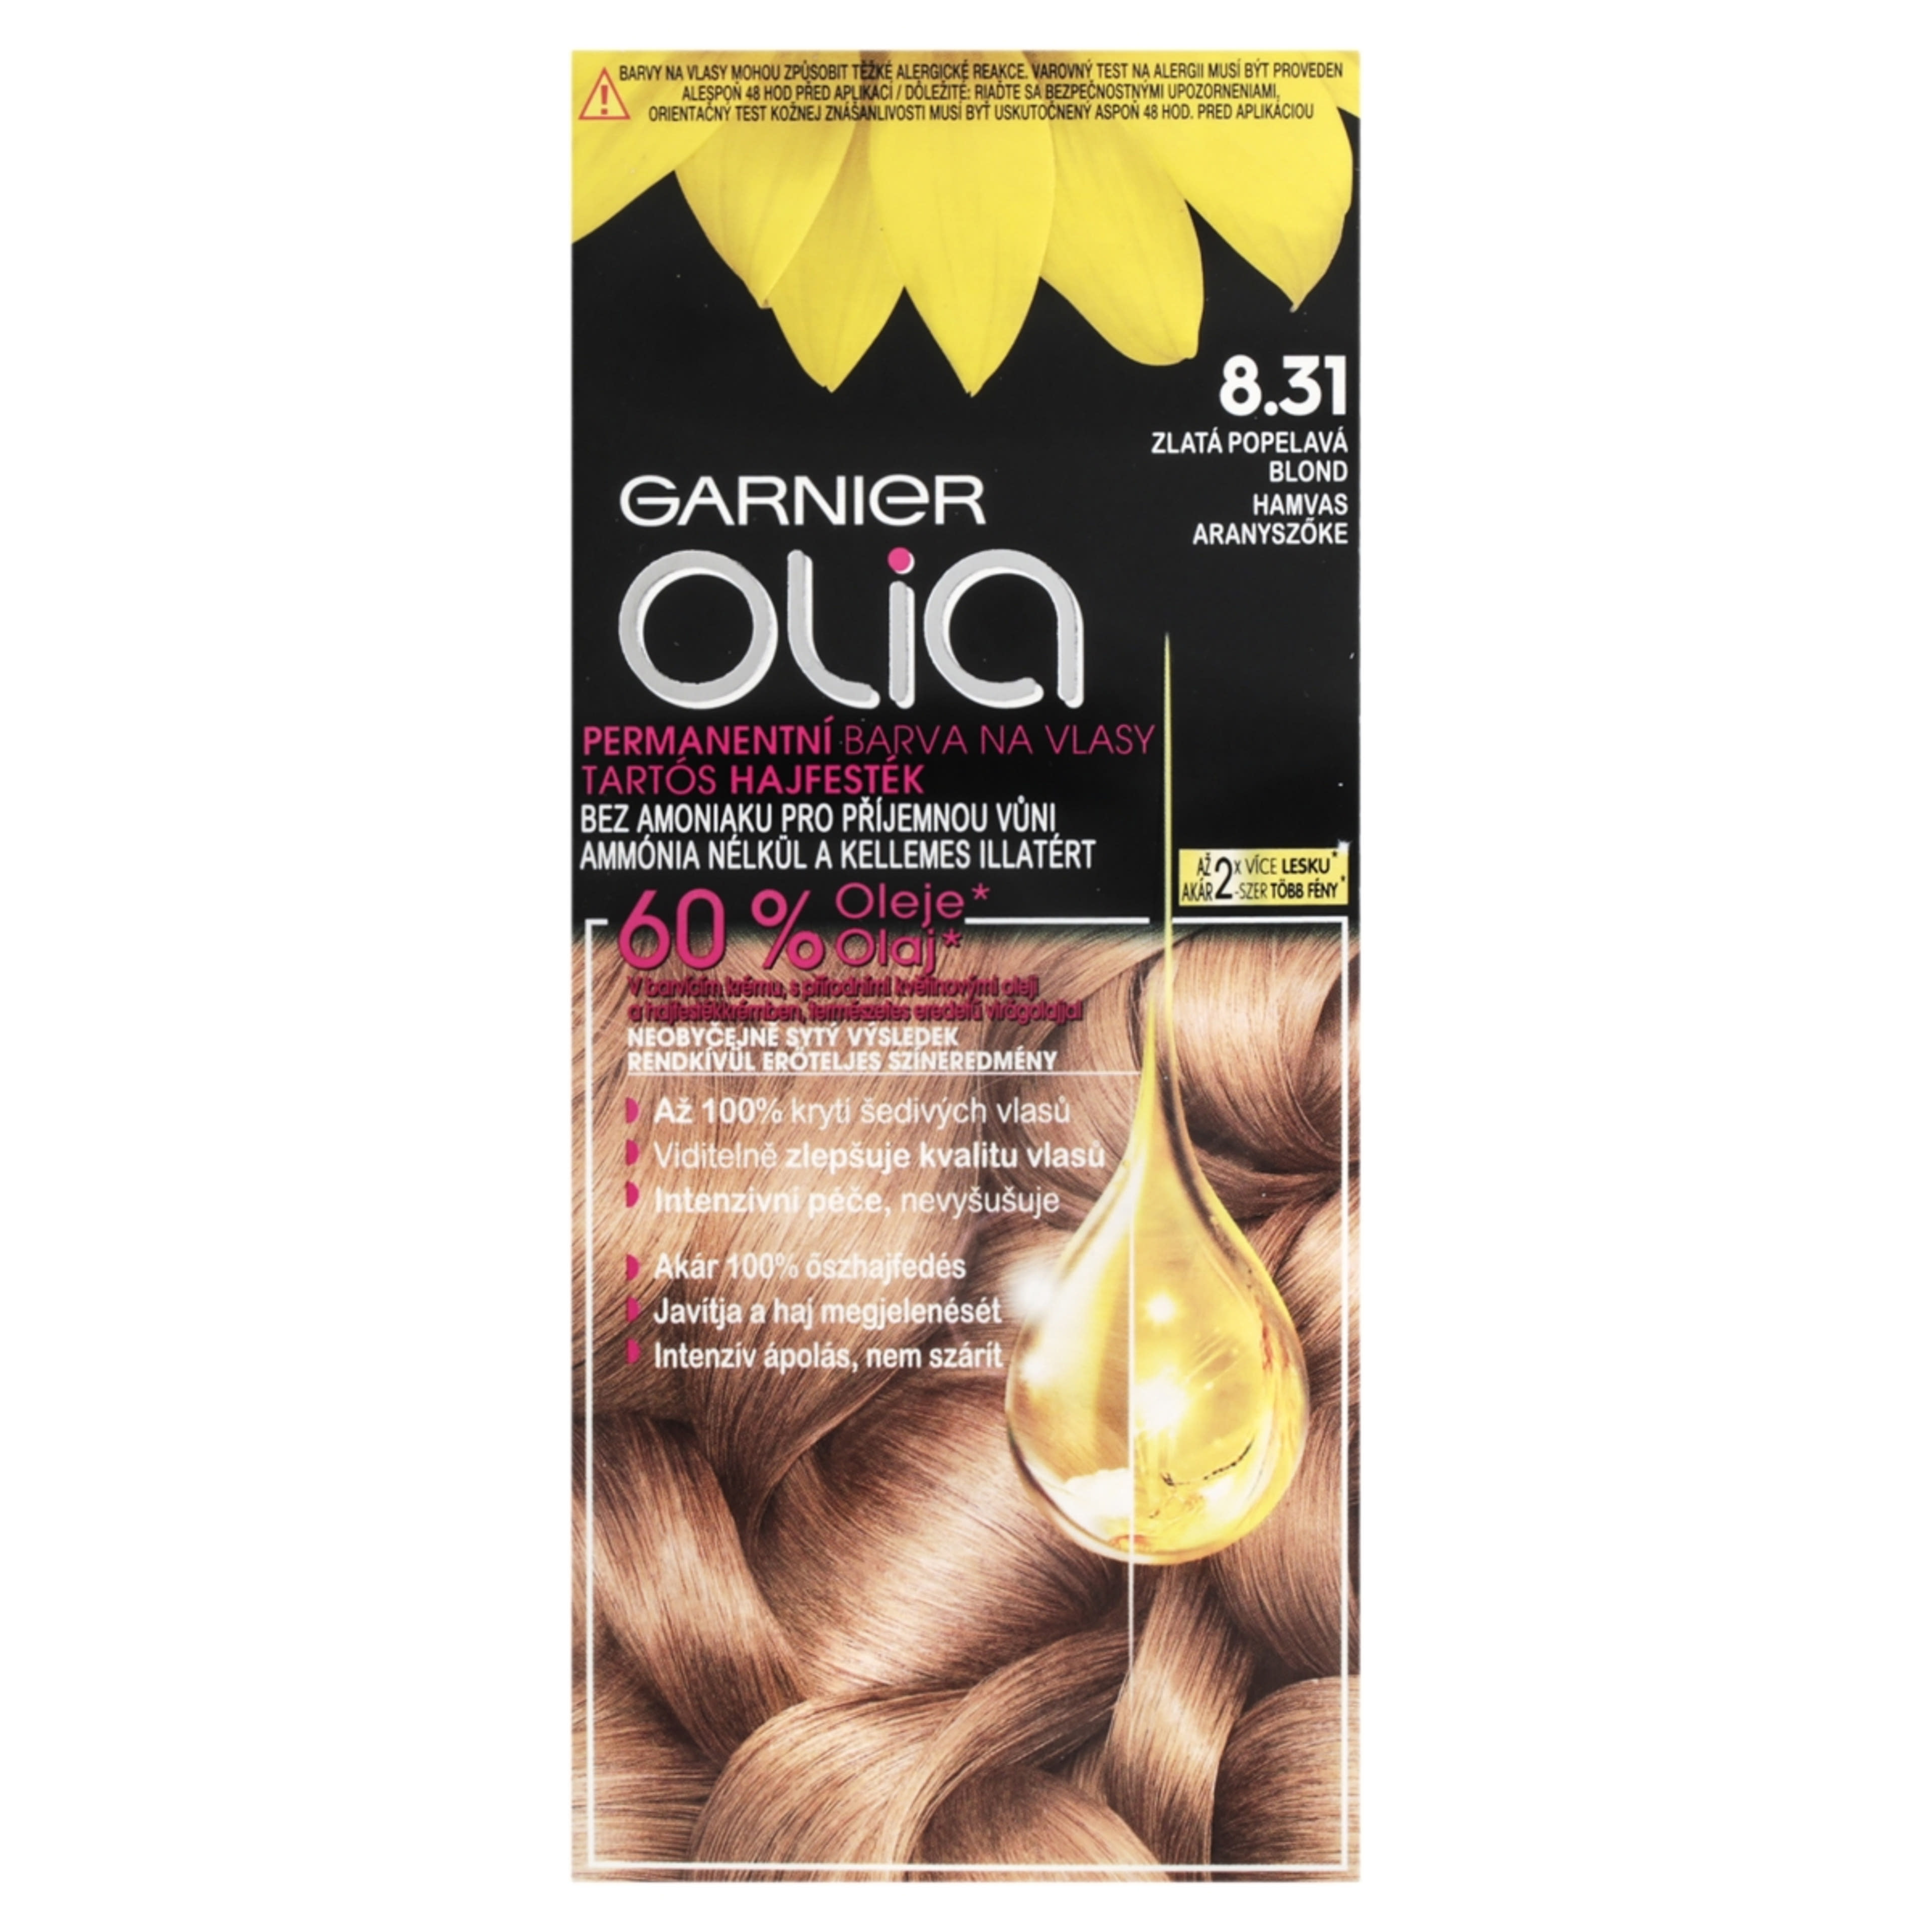 Garnier Olia tartós hajfesték 8.31 Hamvas aranyszőke - 1 db